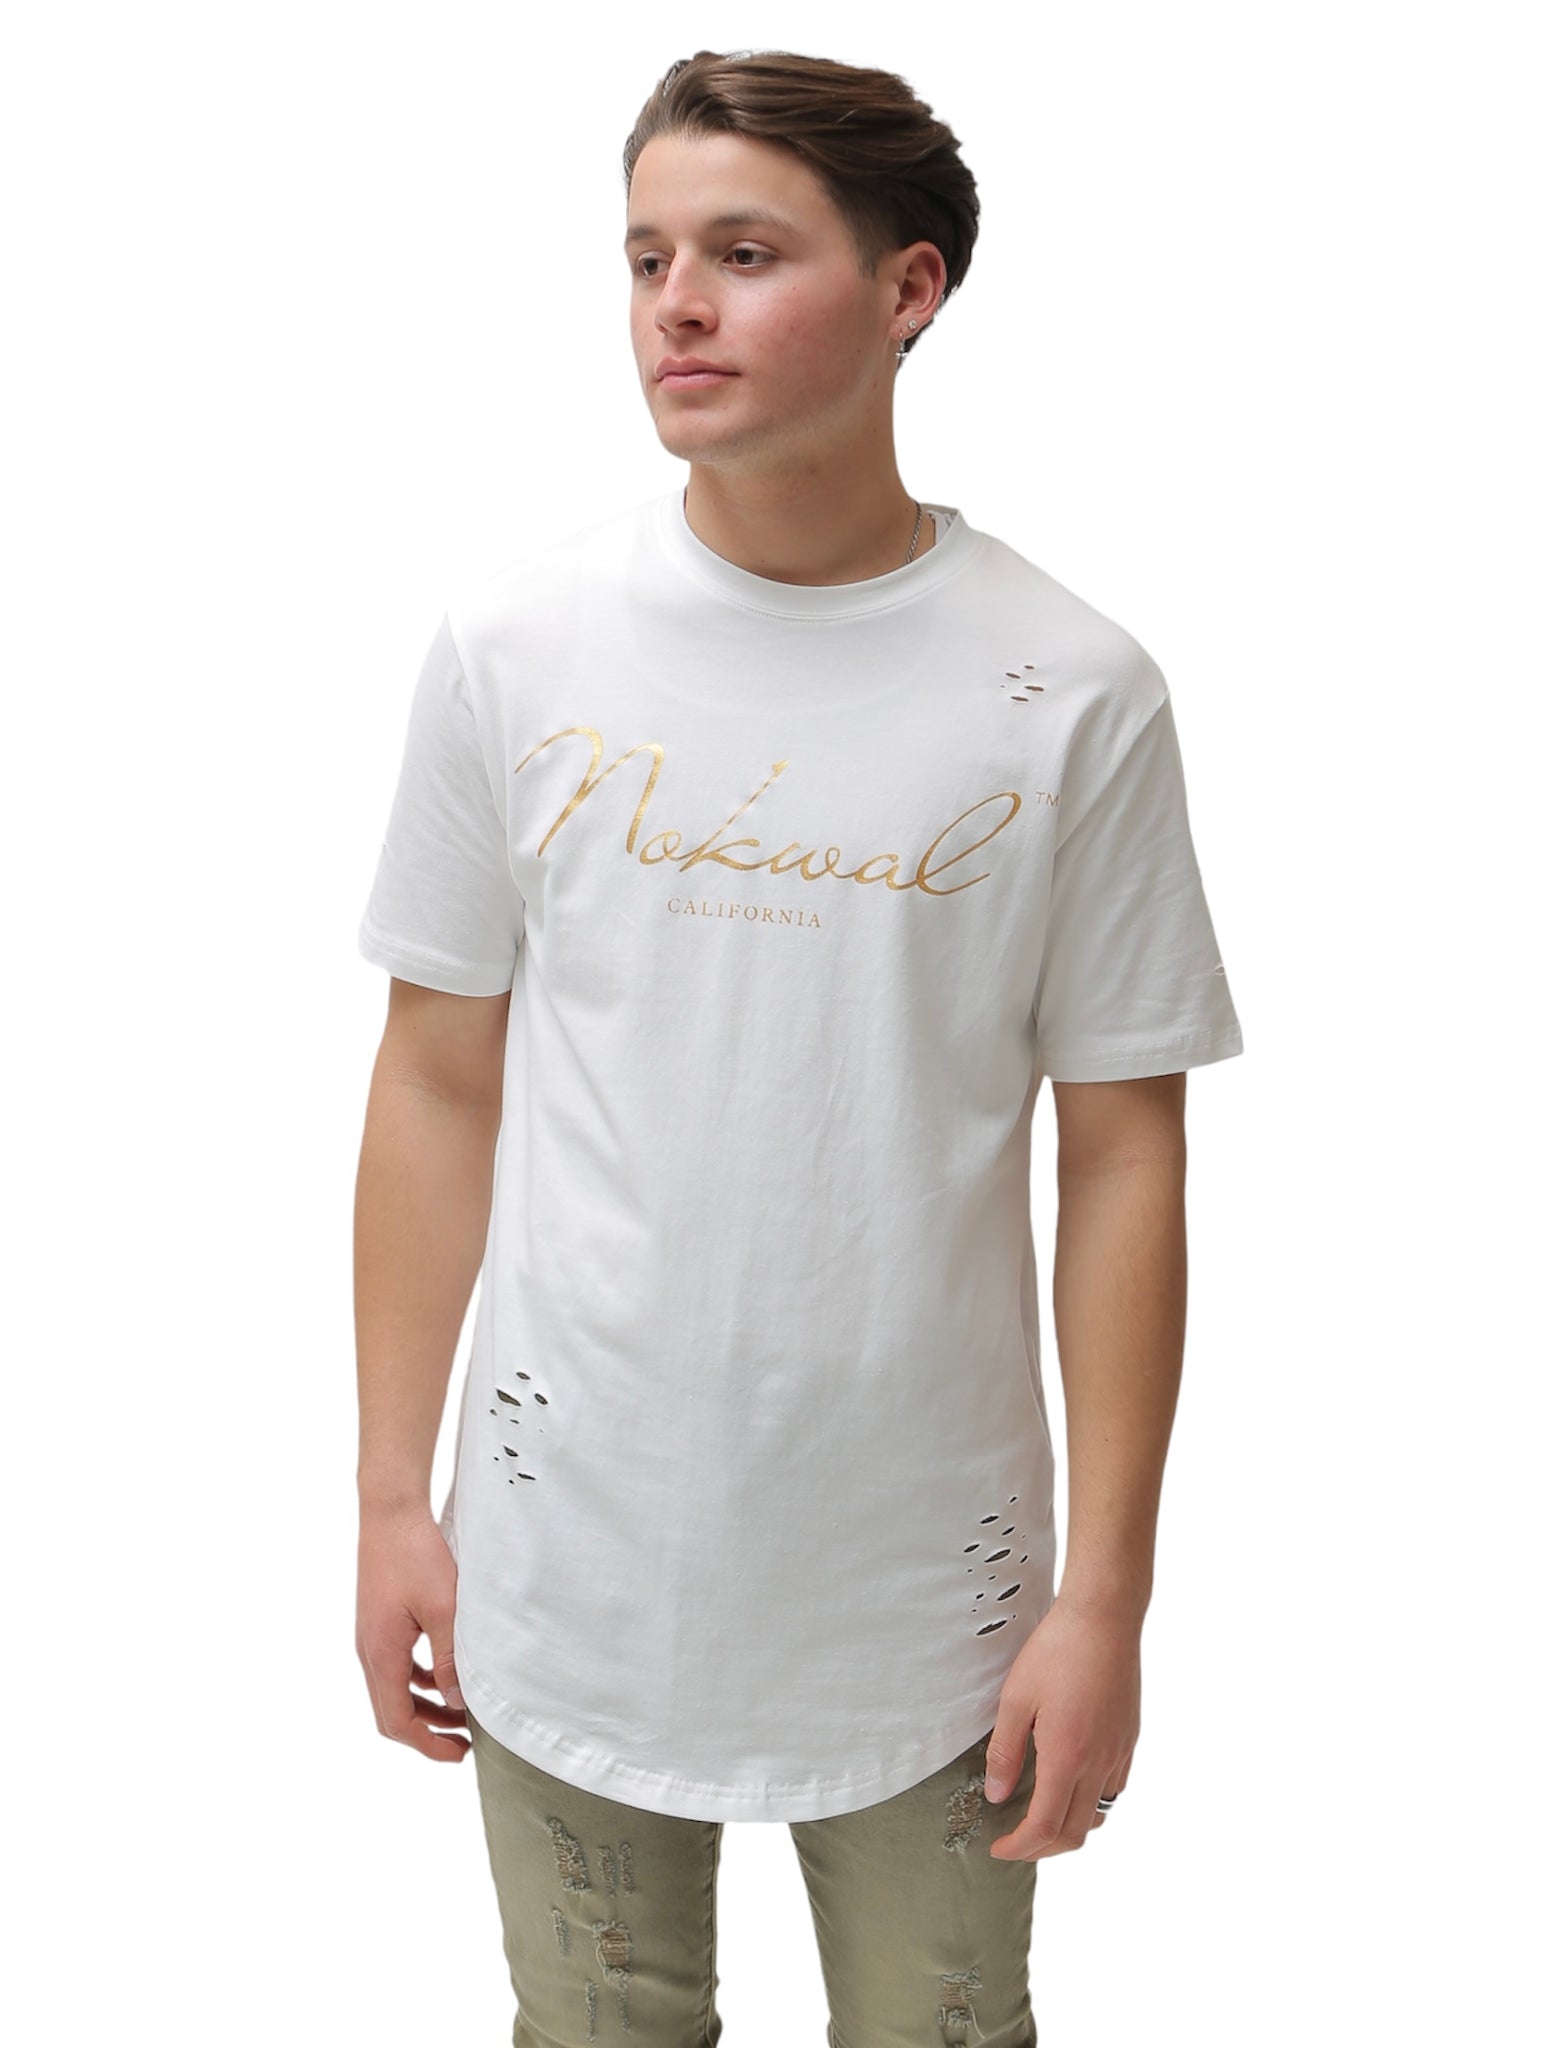 Distressed Signature T- Shirts